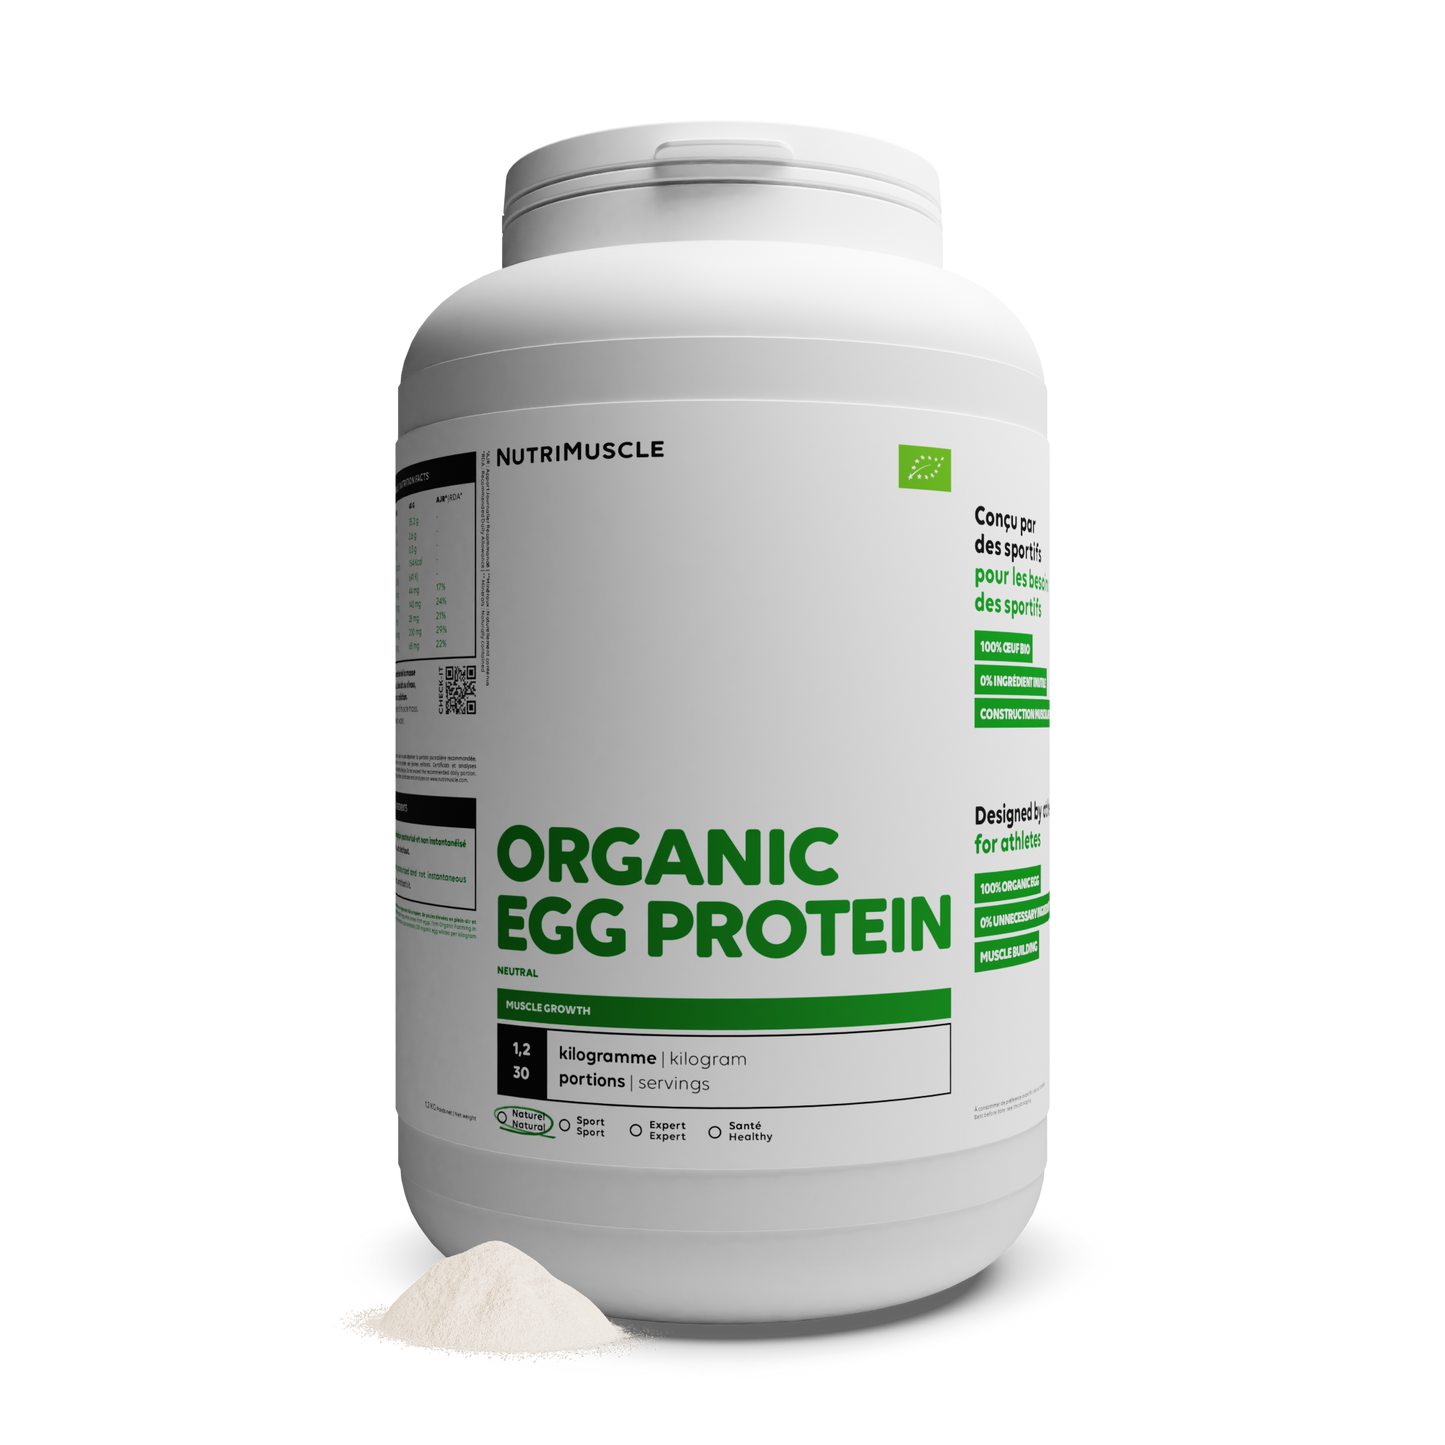 Organic egg protein